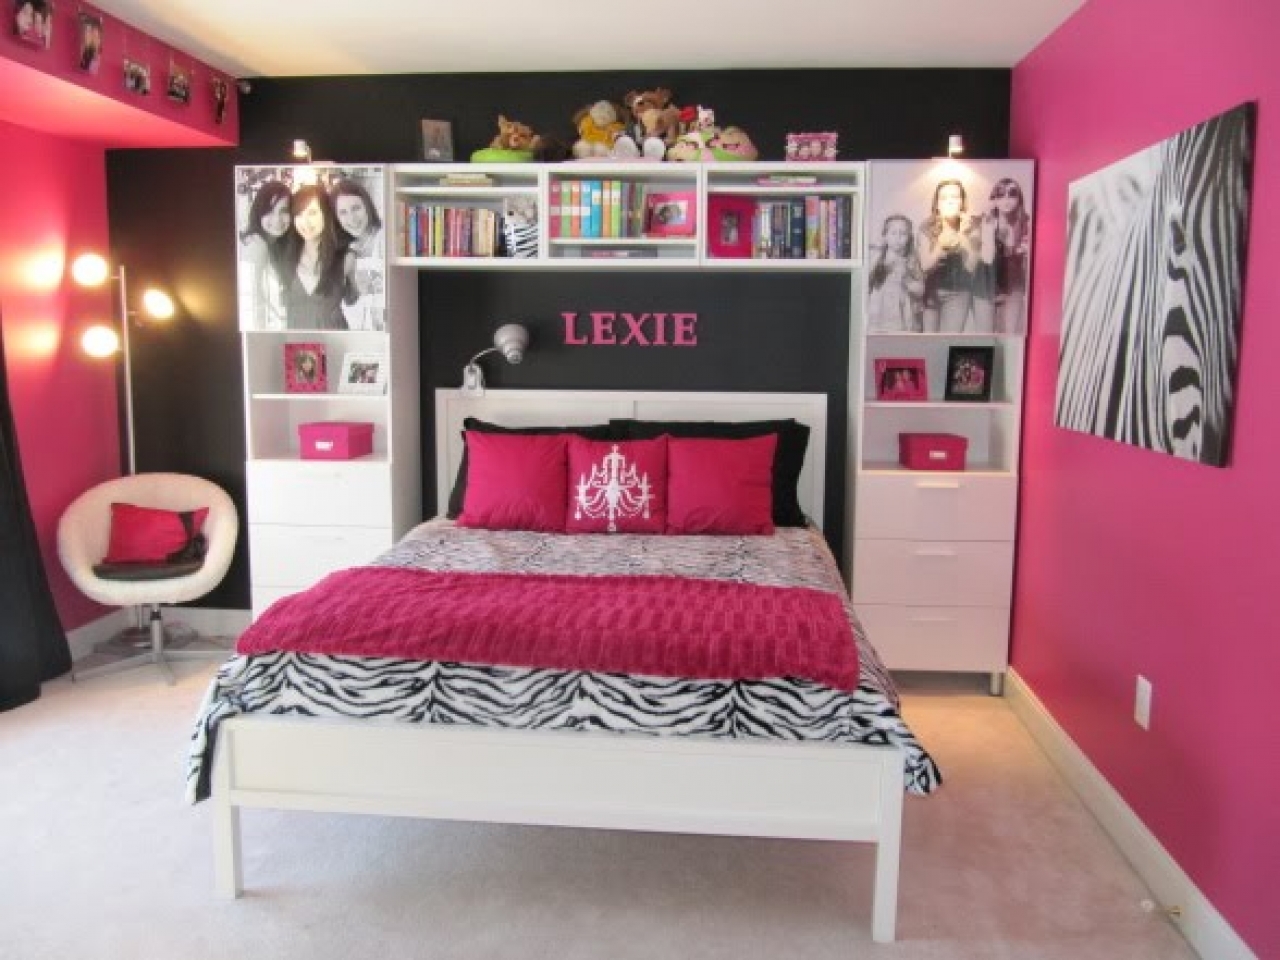 Custom tumblr bedroom Tumblr Bedroom For Girls Designing Awesome Room Ideas 1280x960 Wallpaper Teahub Io